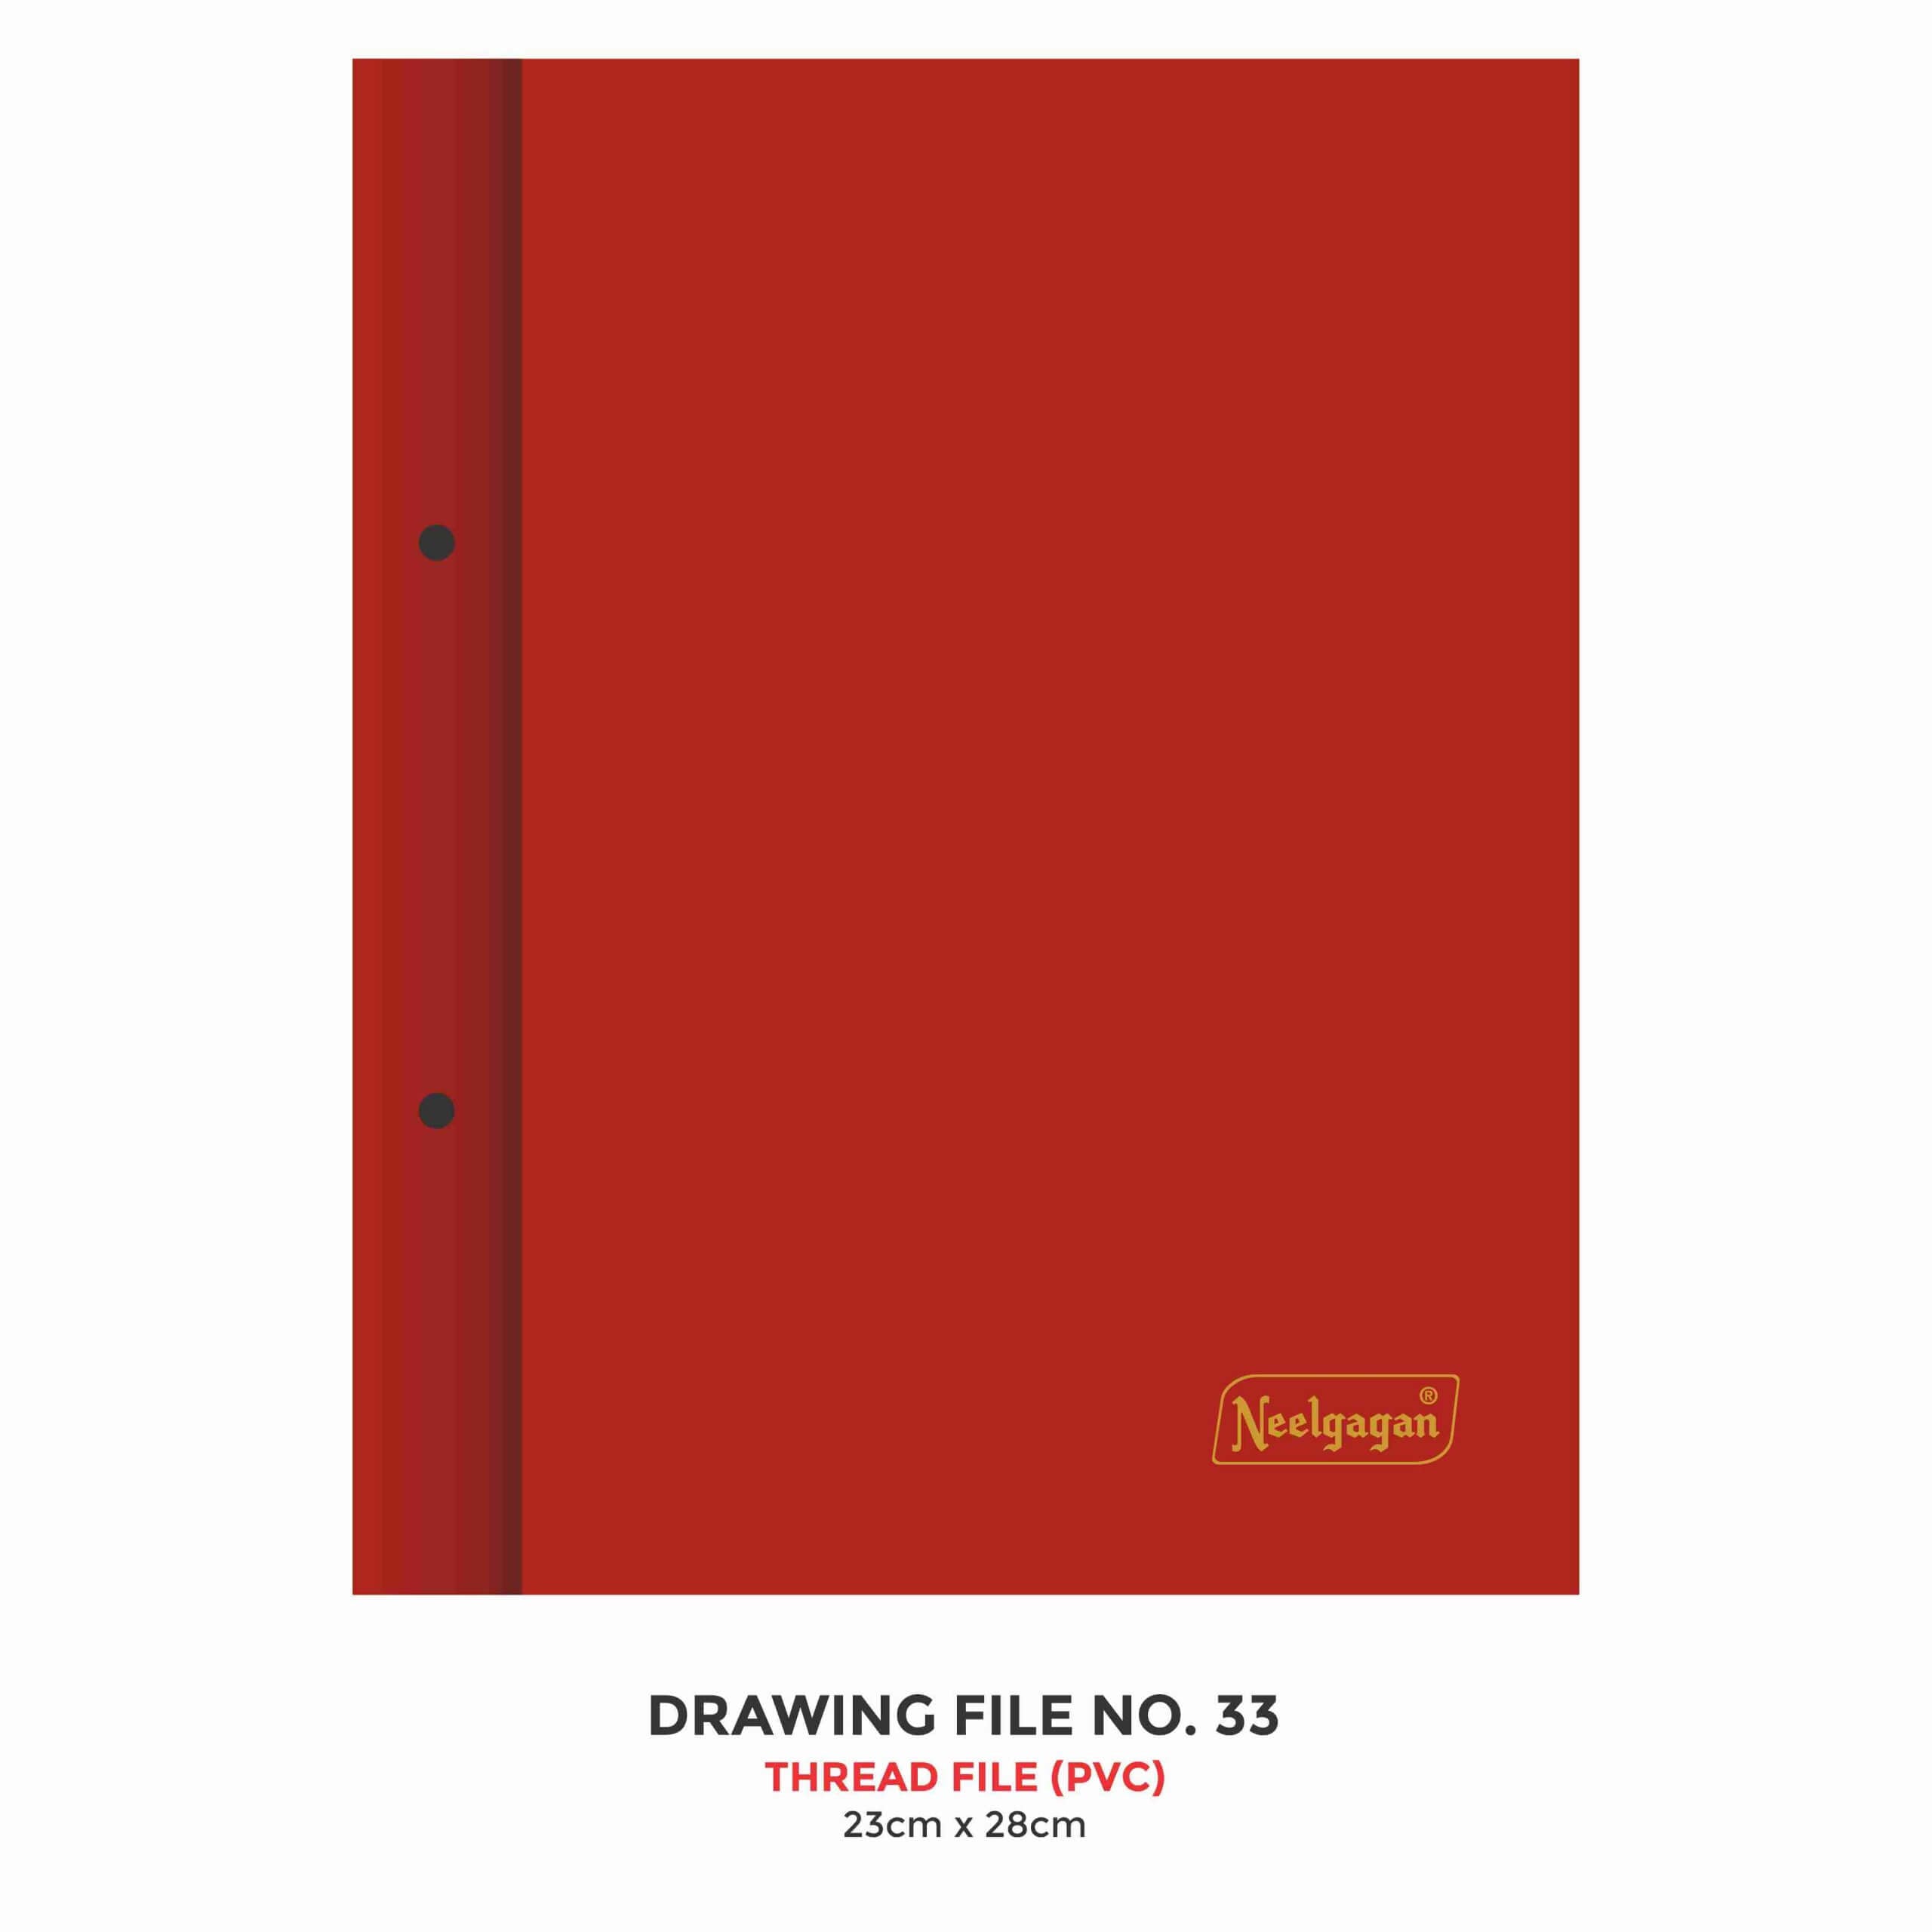 Drawing File No.33, (23cm X 28cm), (Thread File) PVC Cover